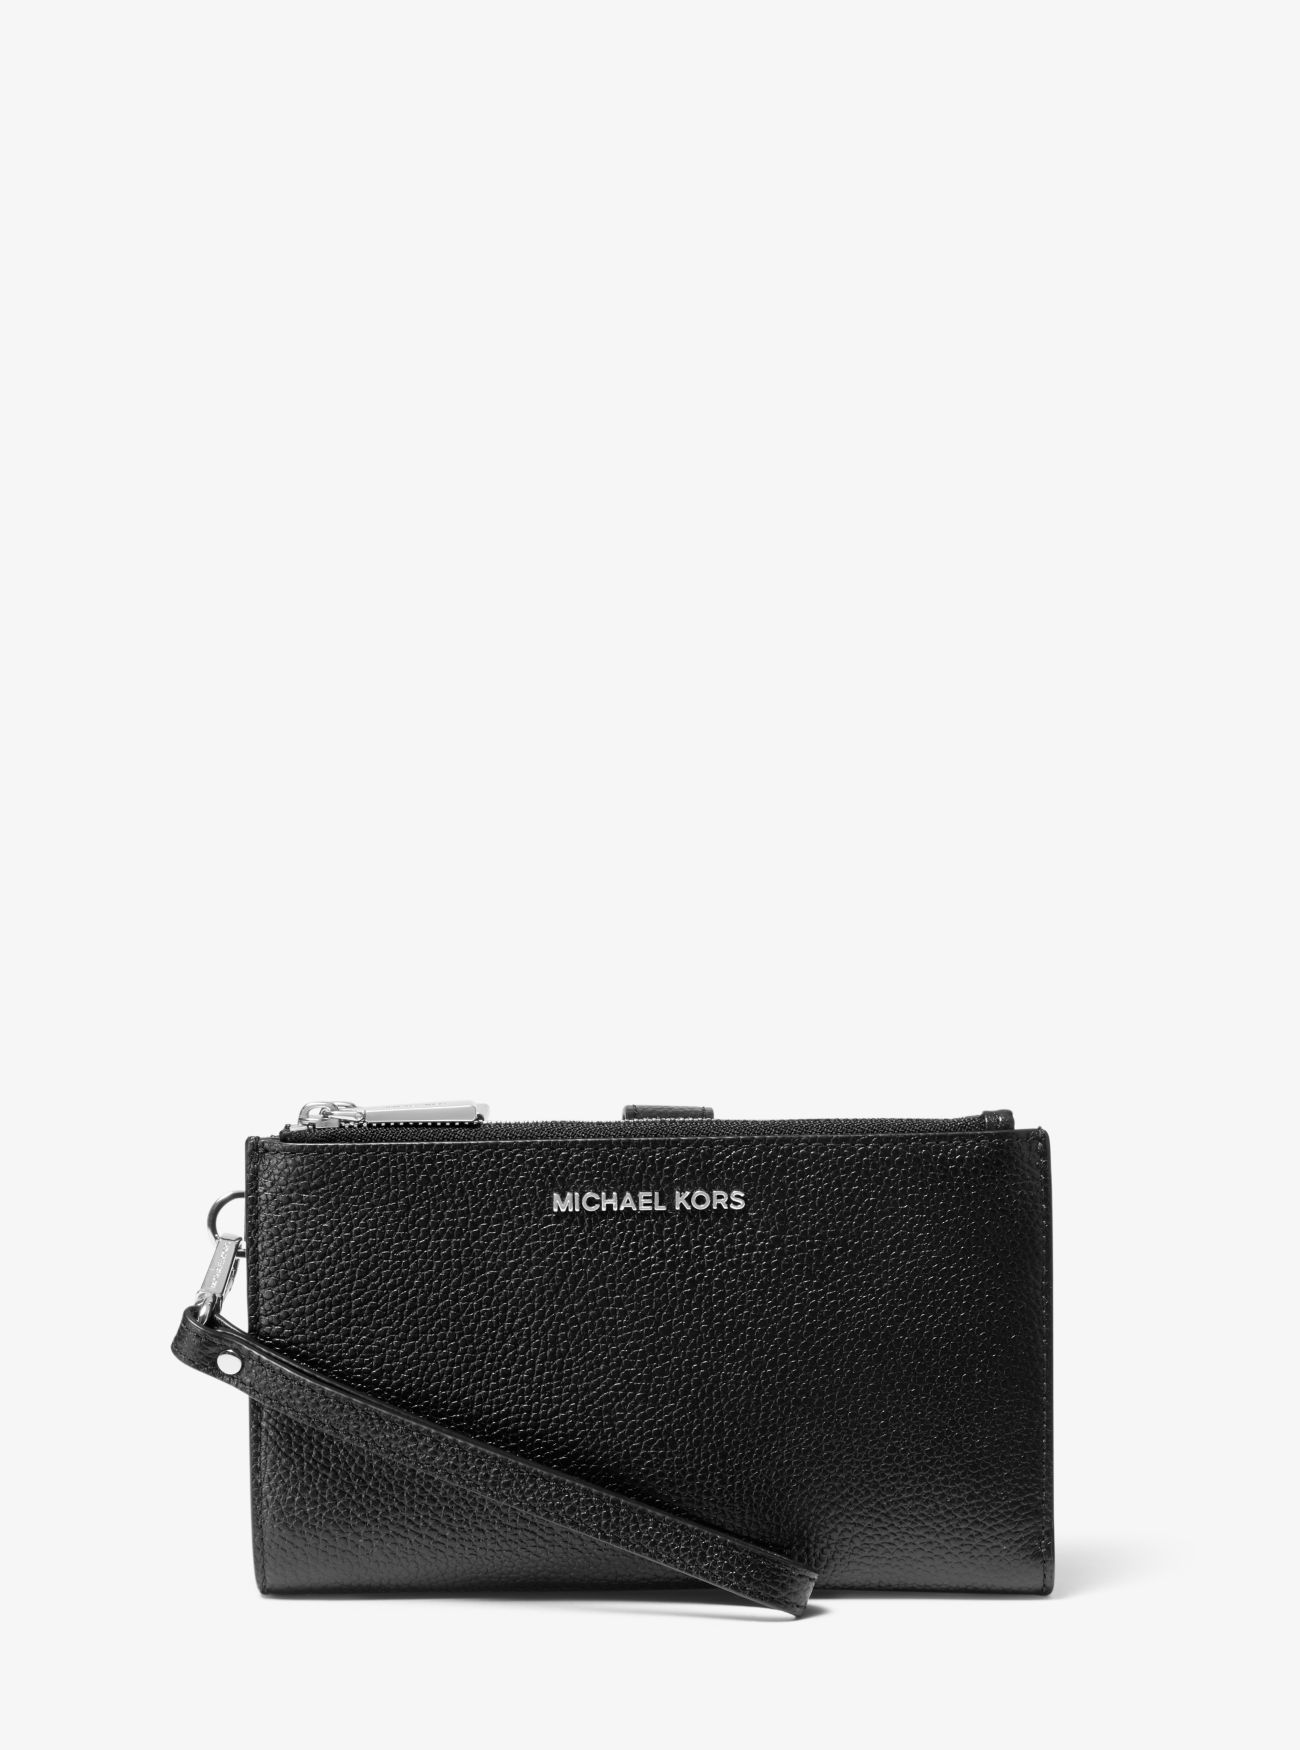 MK Adele Leather Smartphone Wallet - Black - Michael Kors